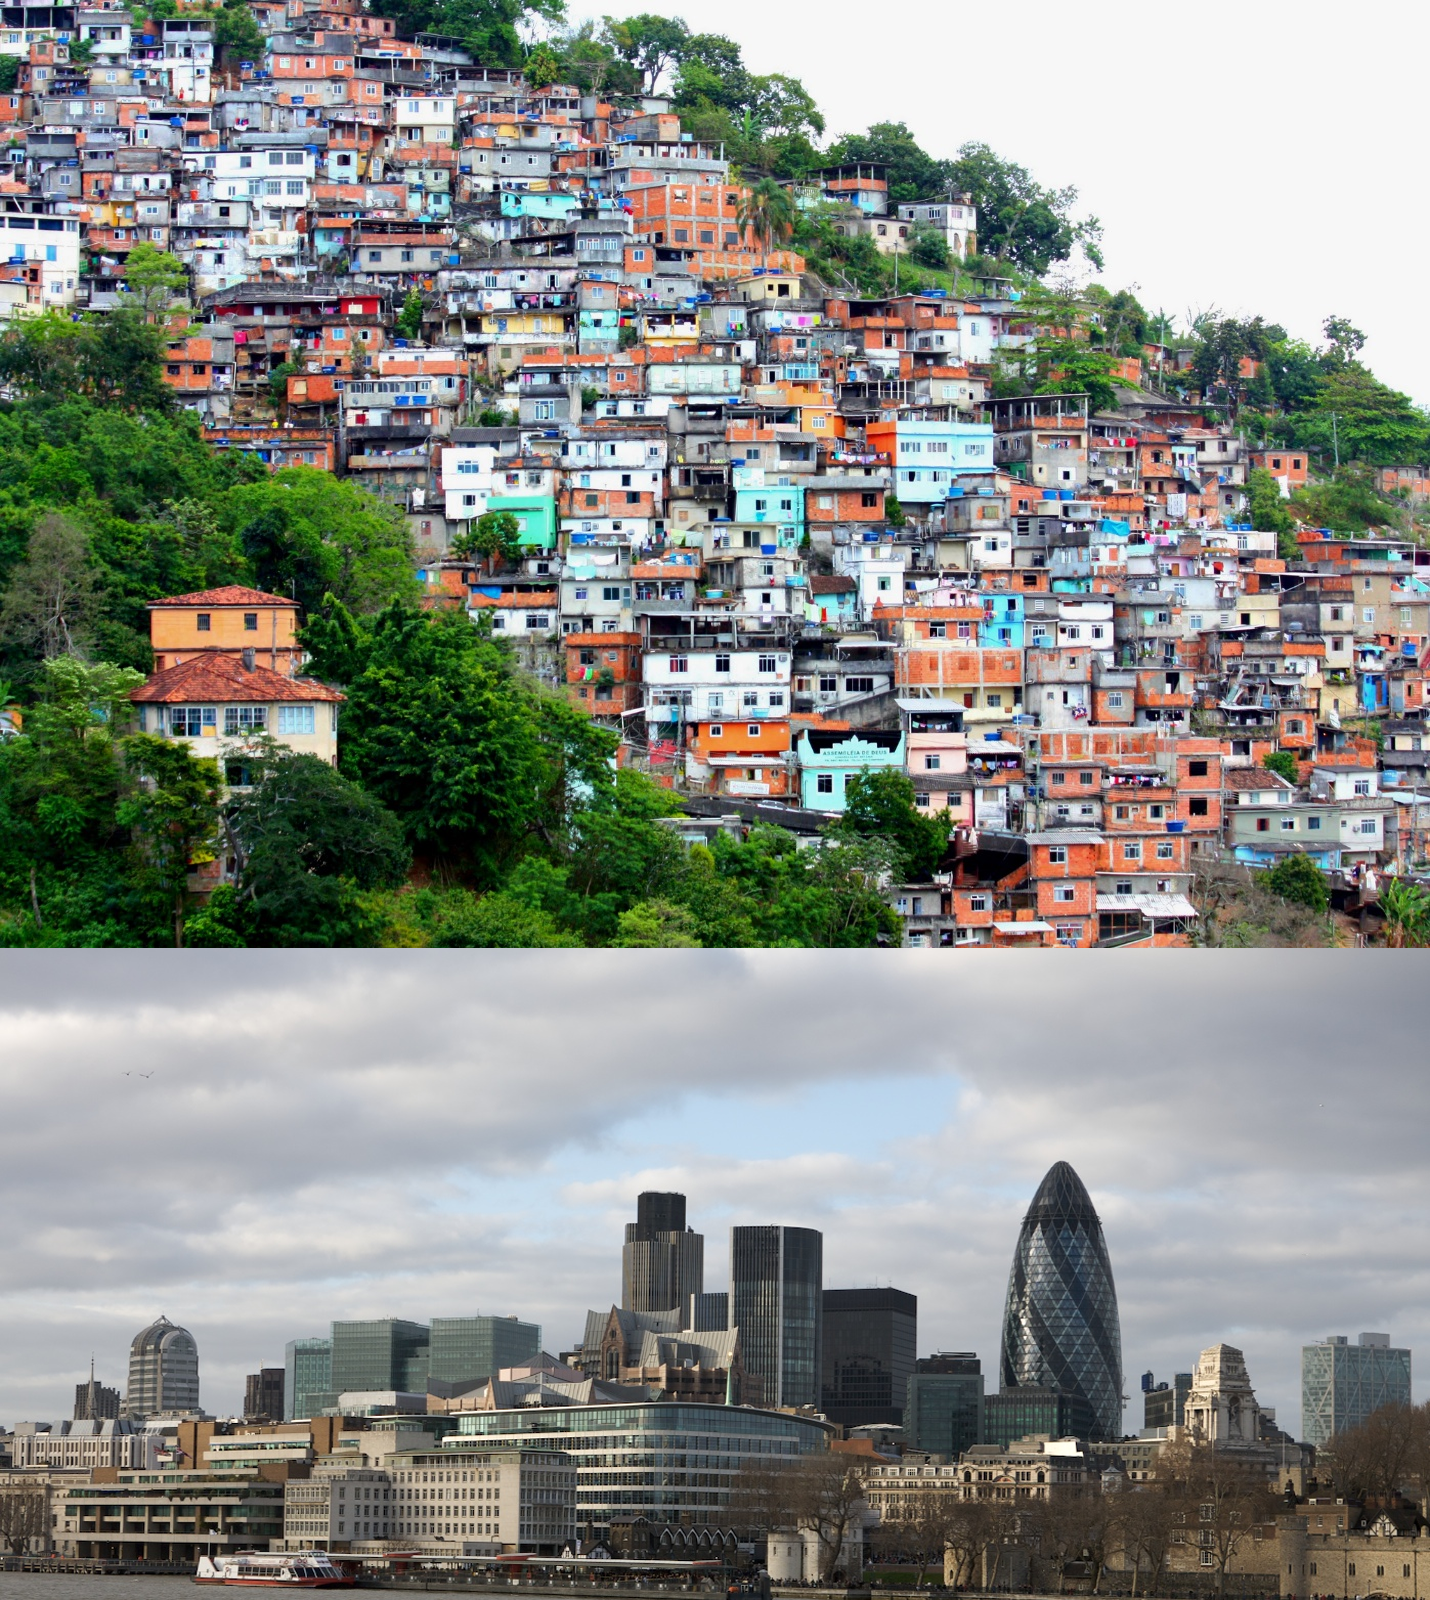 Urban, Urbanization, and Human Population